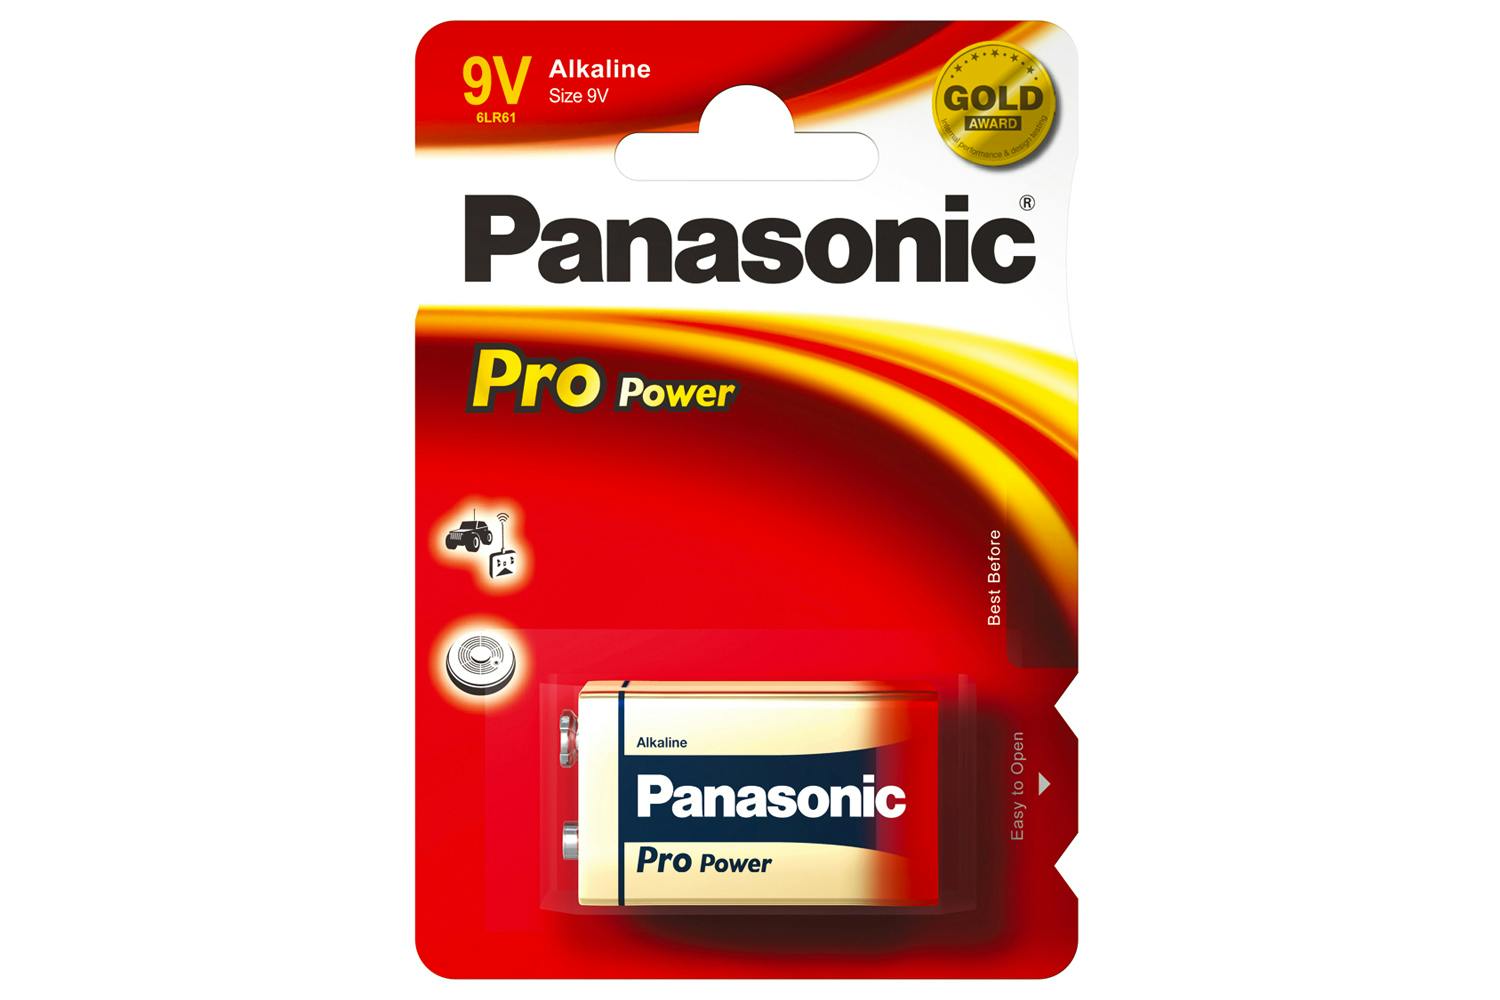 Panasonic Pro Power Gold Batteries | L6LR61X/1BP